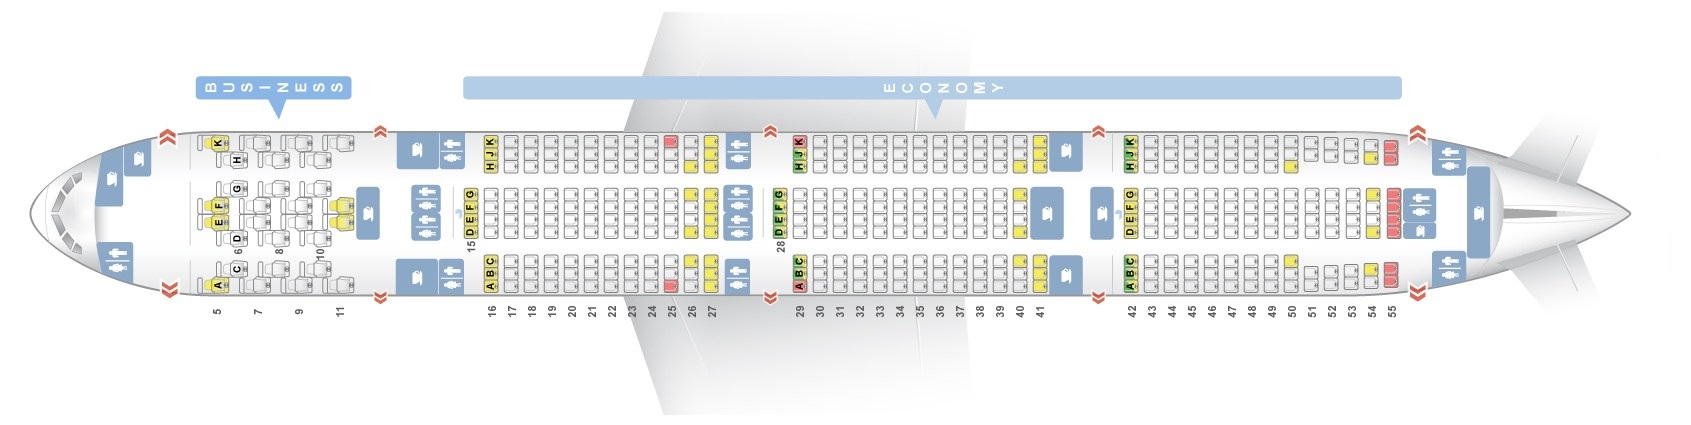 Boeing 777 300er Seating Chart Etihad